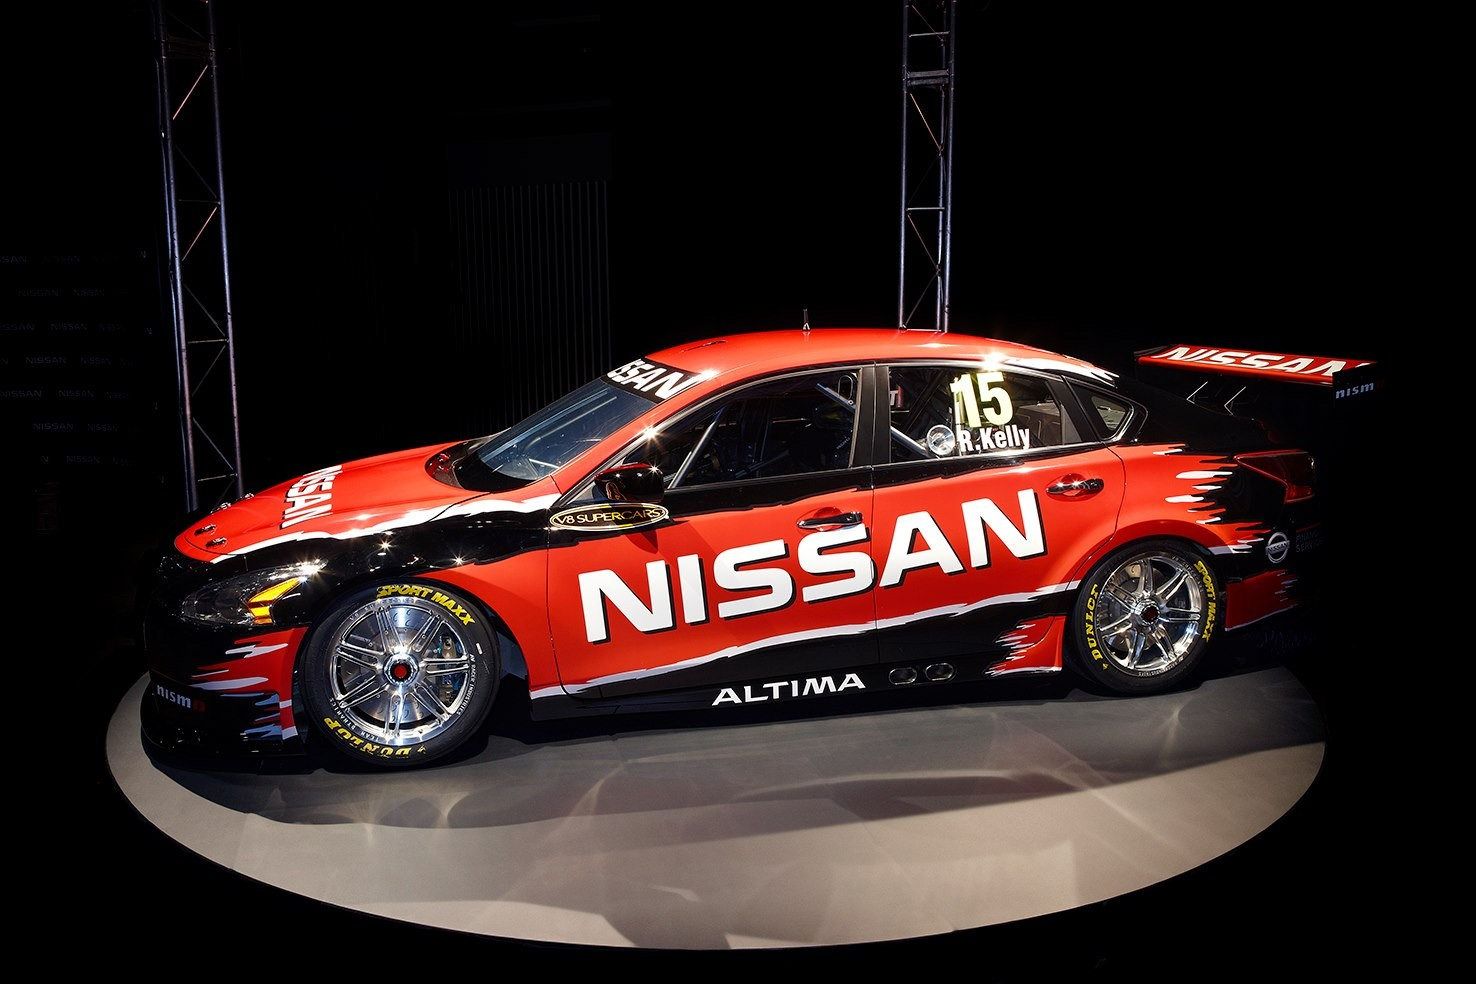 2013 Nissan Altima V8 Supercar Series Race Car